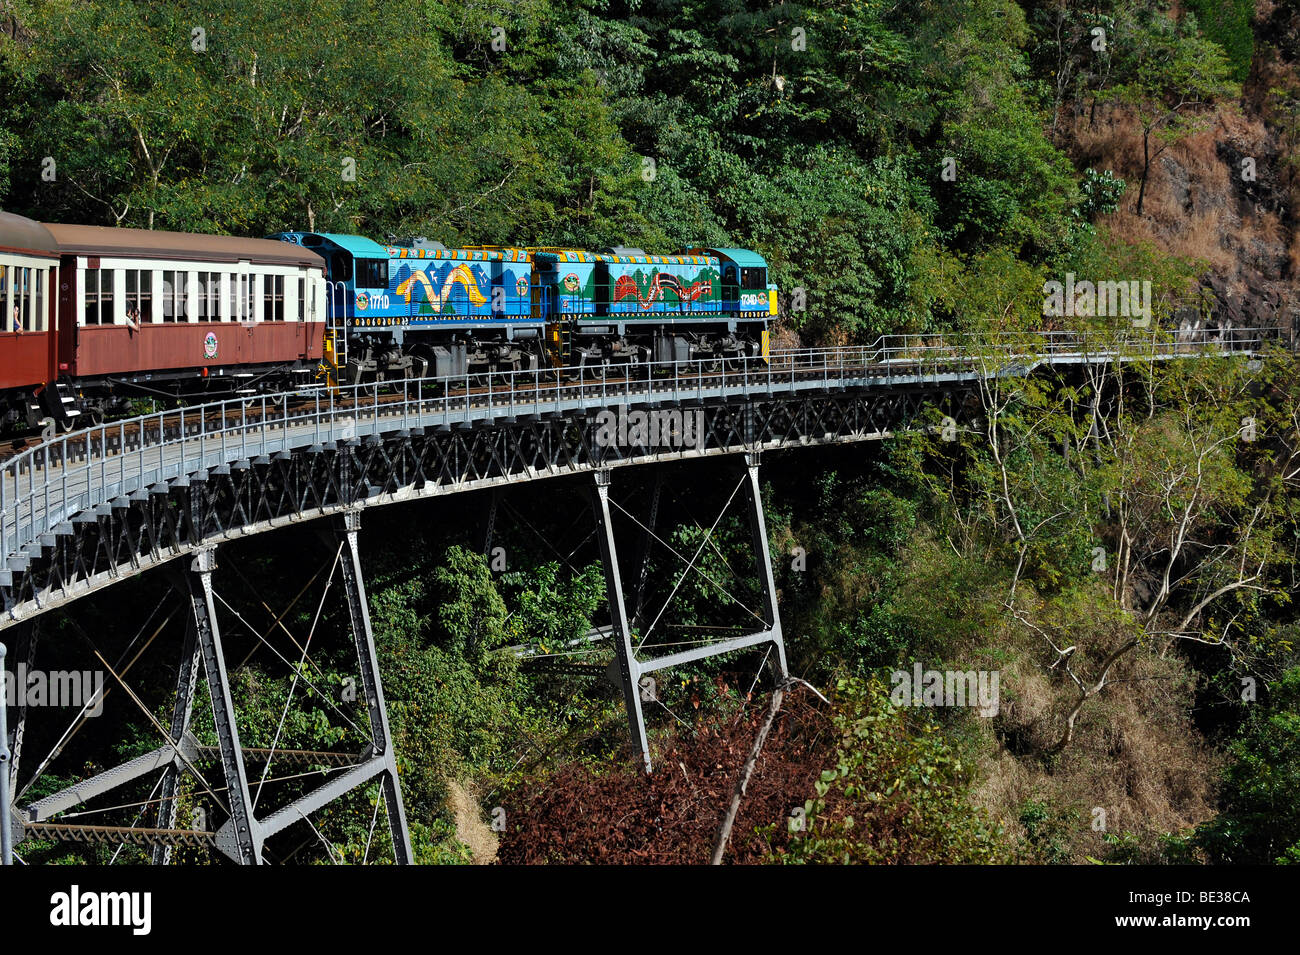 Stoney Creek Bridge, diesel locomotives et wagons, Kuranda Scenic Railway, rainforest, Atherton, Queensland, Australie Banque D'Images